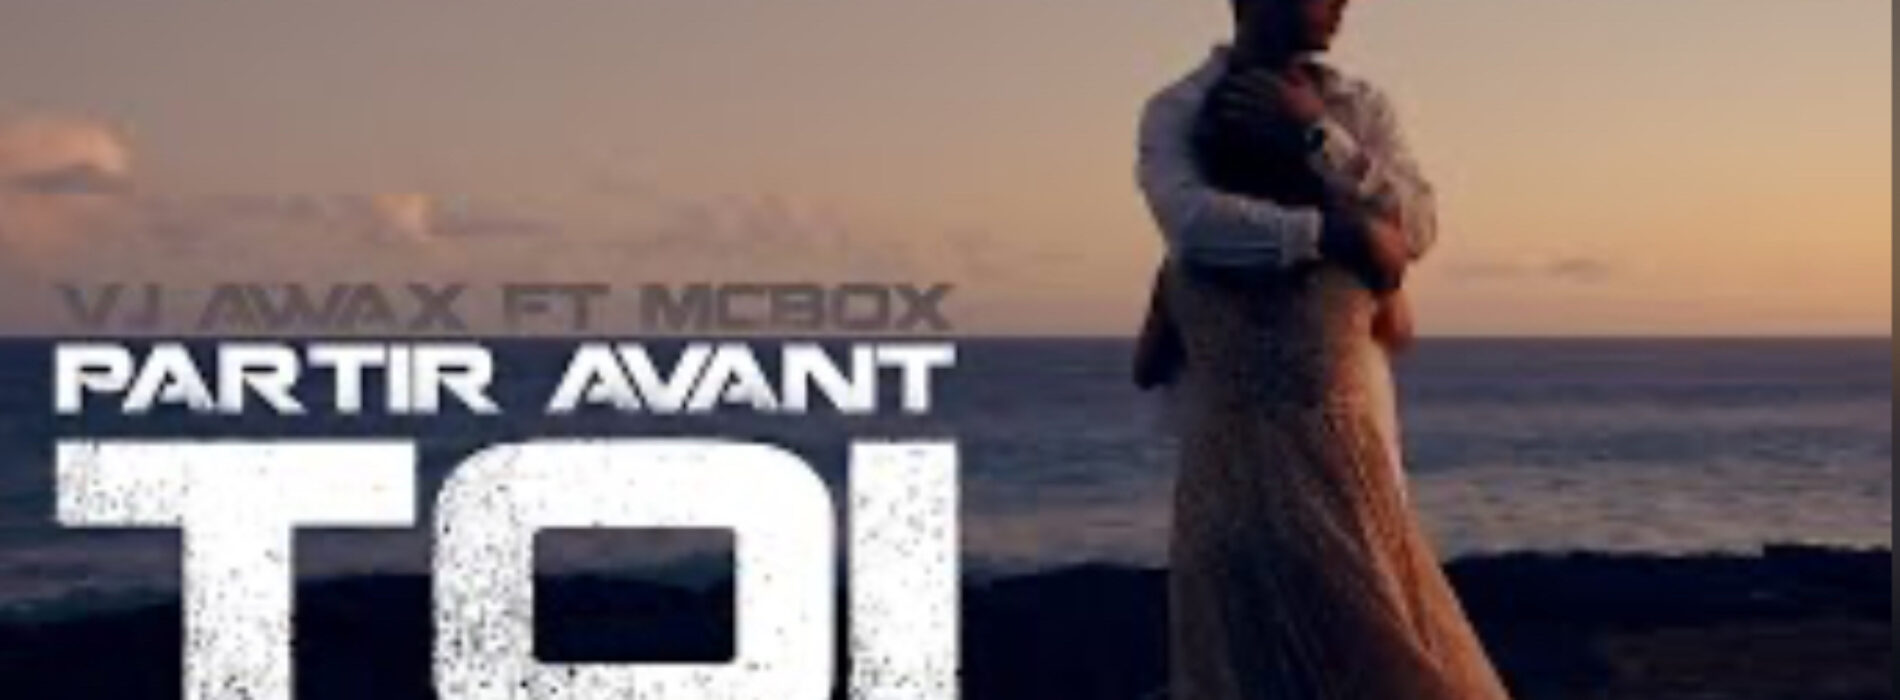 Vj Awax feat MC BOX – Partir avant toi (clip officiel) – Mai 2021